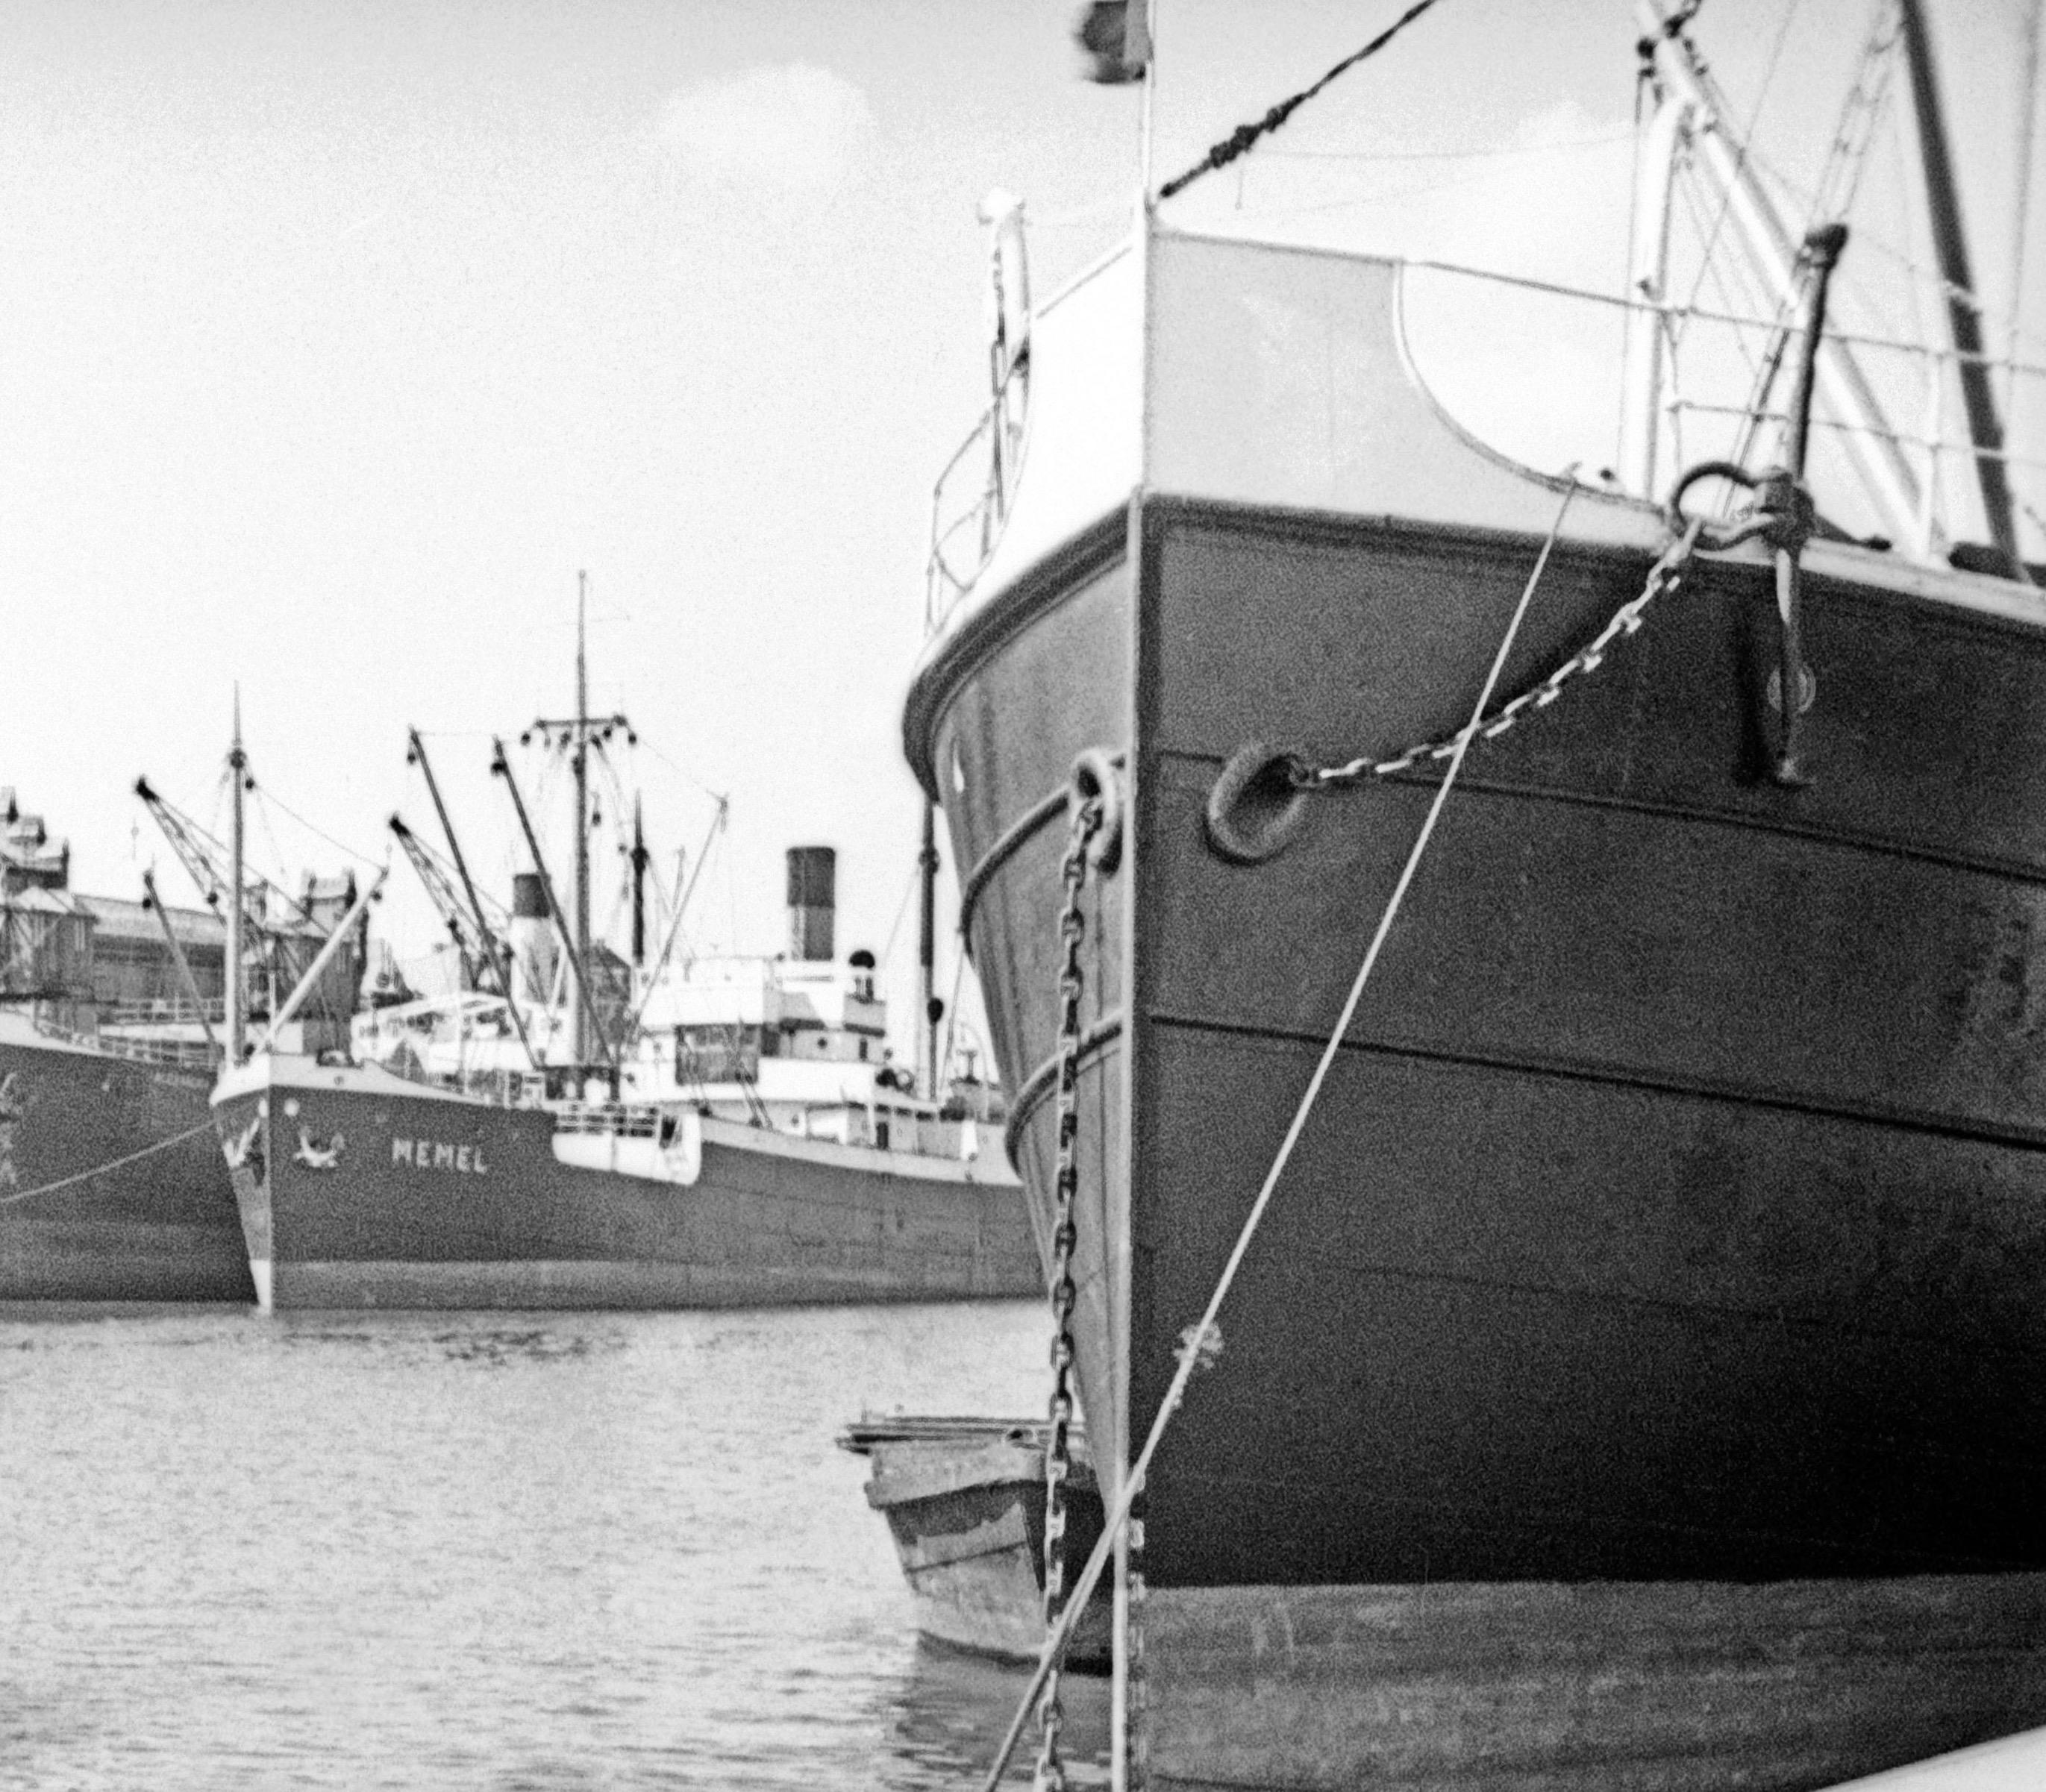 Ships at the inner harbor of Koenigsberg, Allemagne 1934 Imprimé plus tard  - Photograph de Karl Heinrich Lämmel